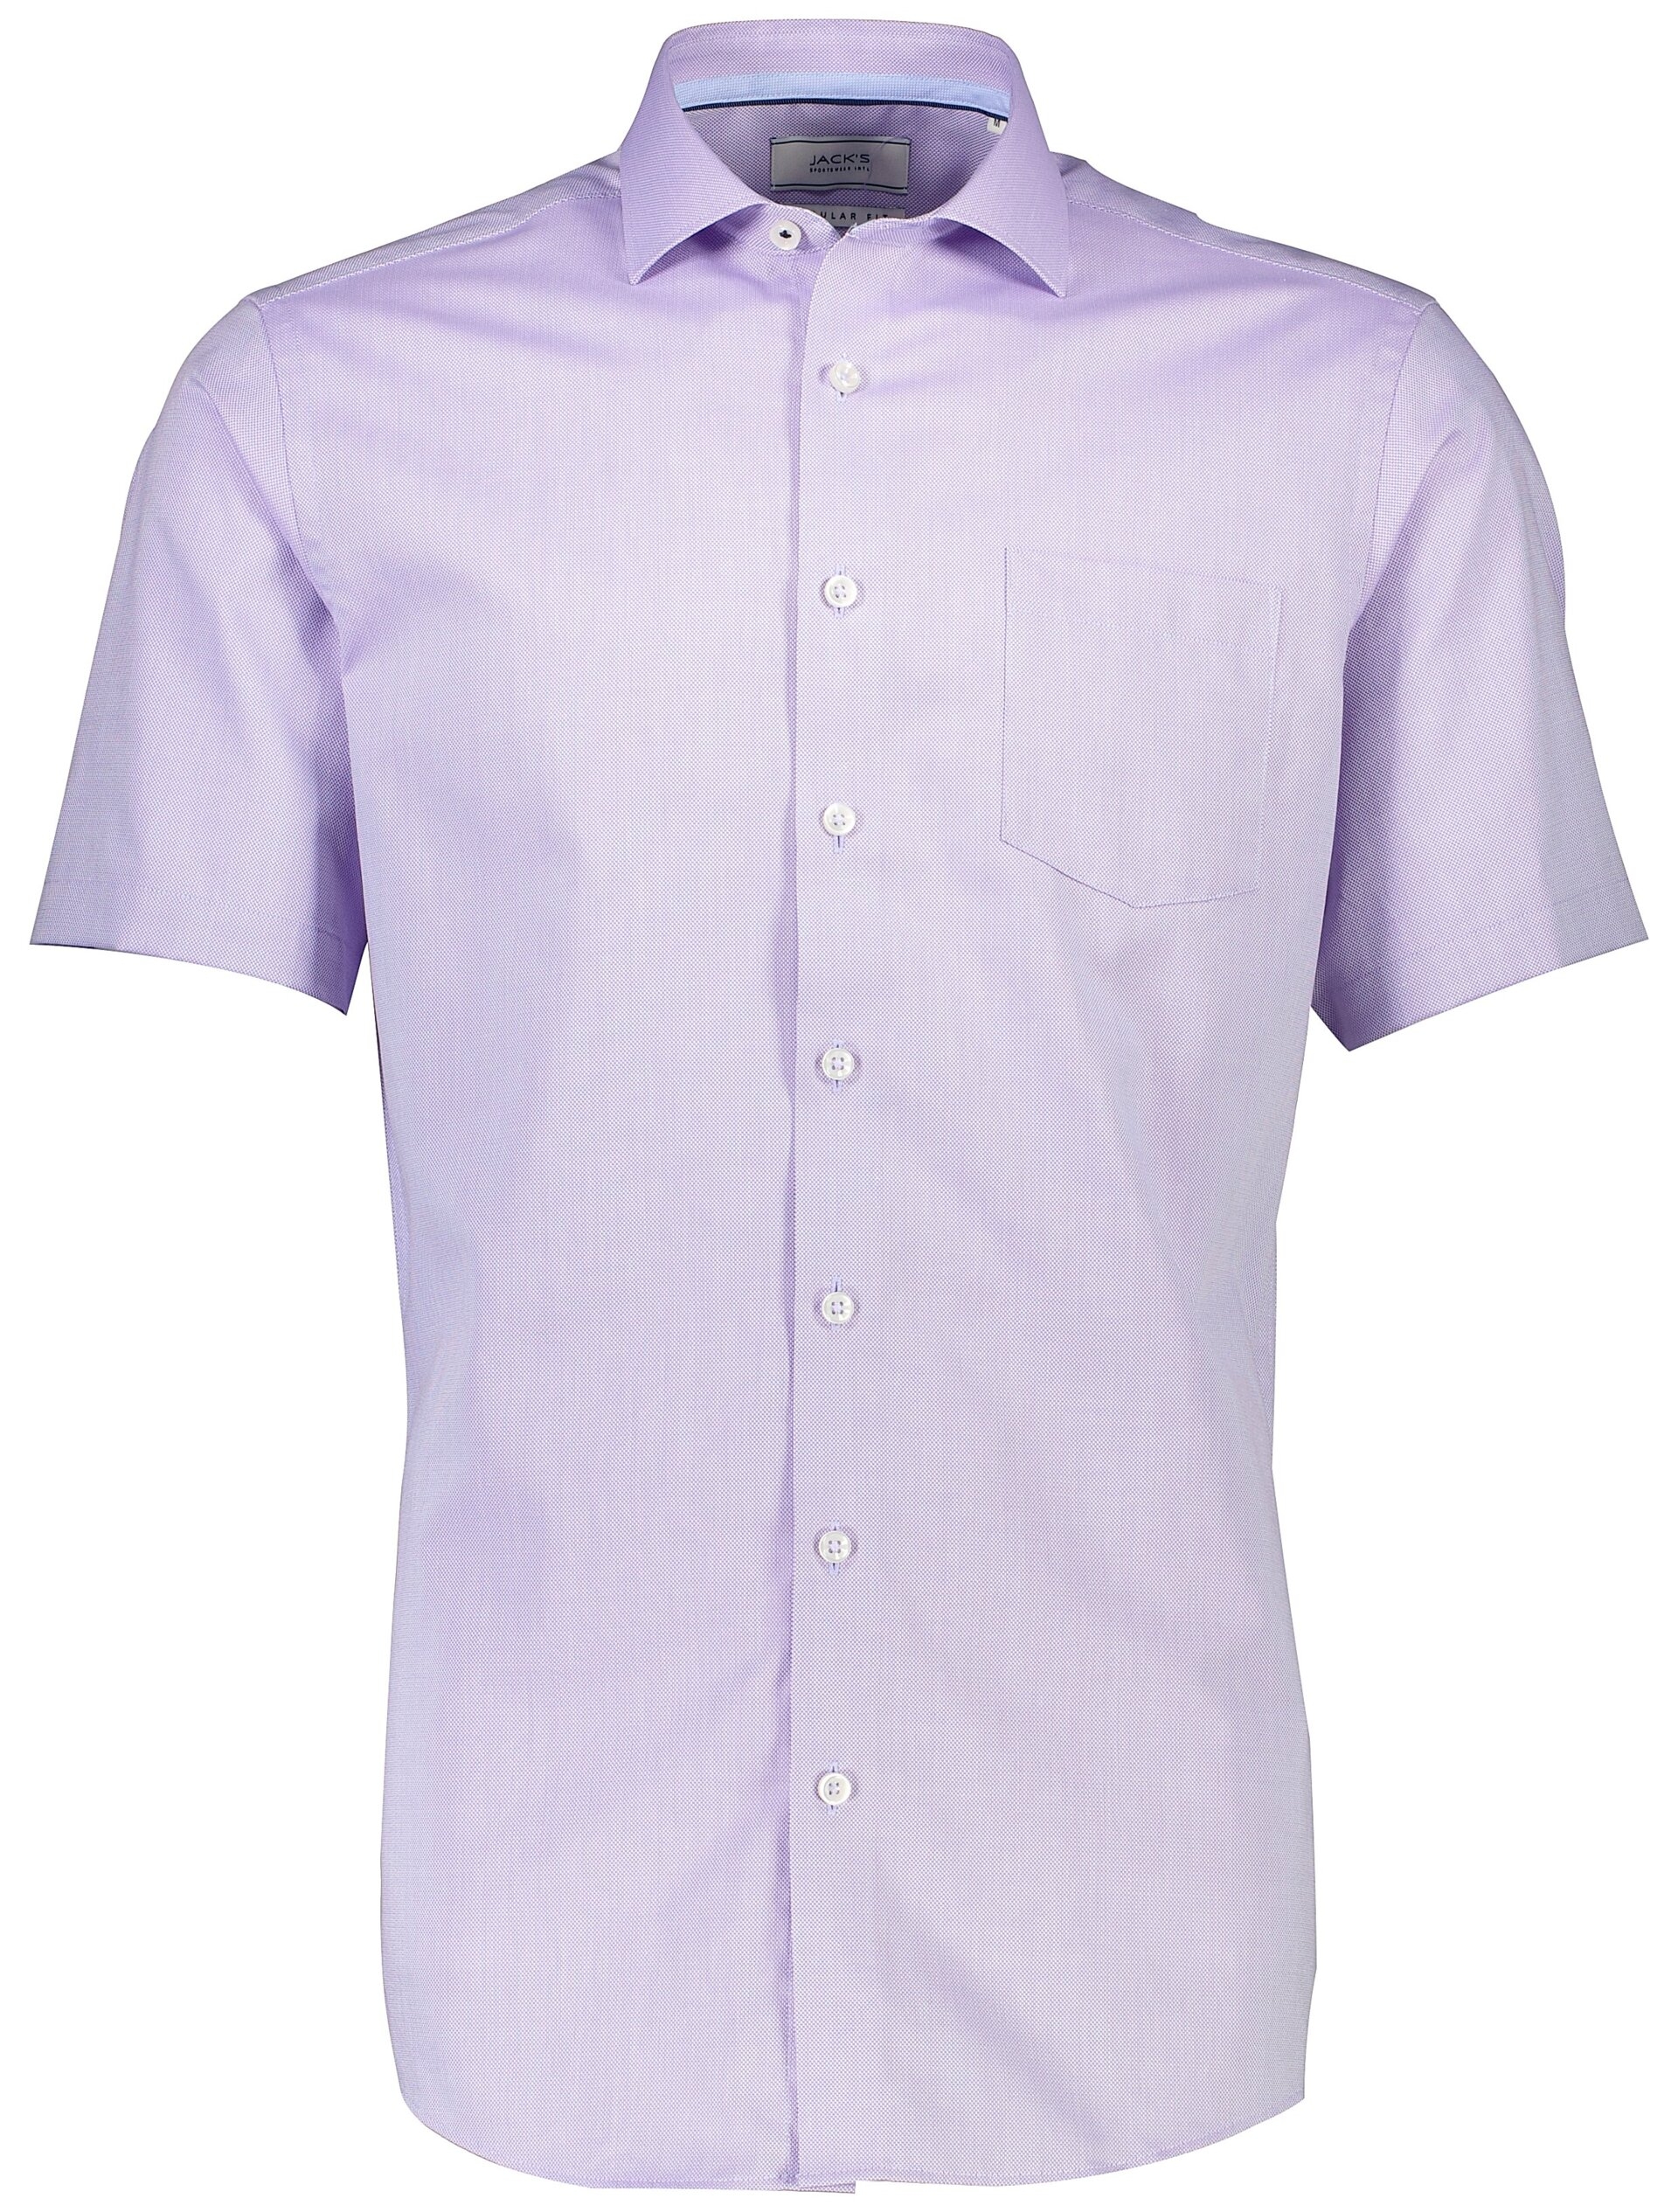 Jack's Casual skjorte lilla / mid purple